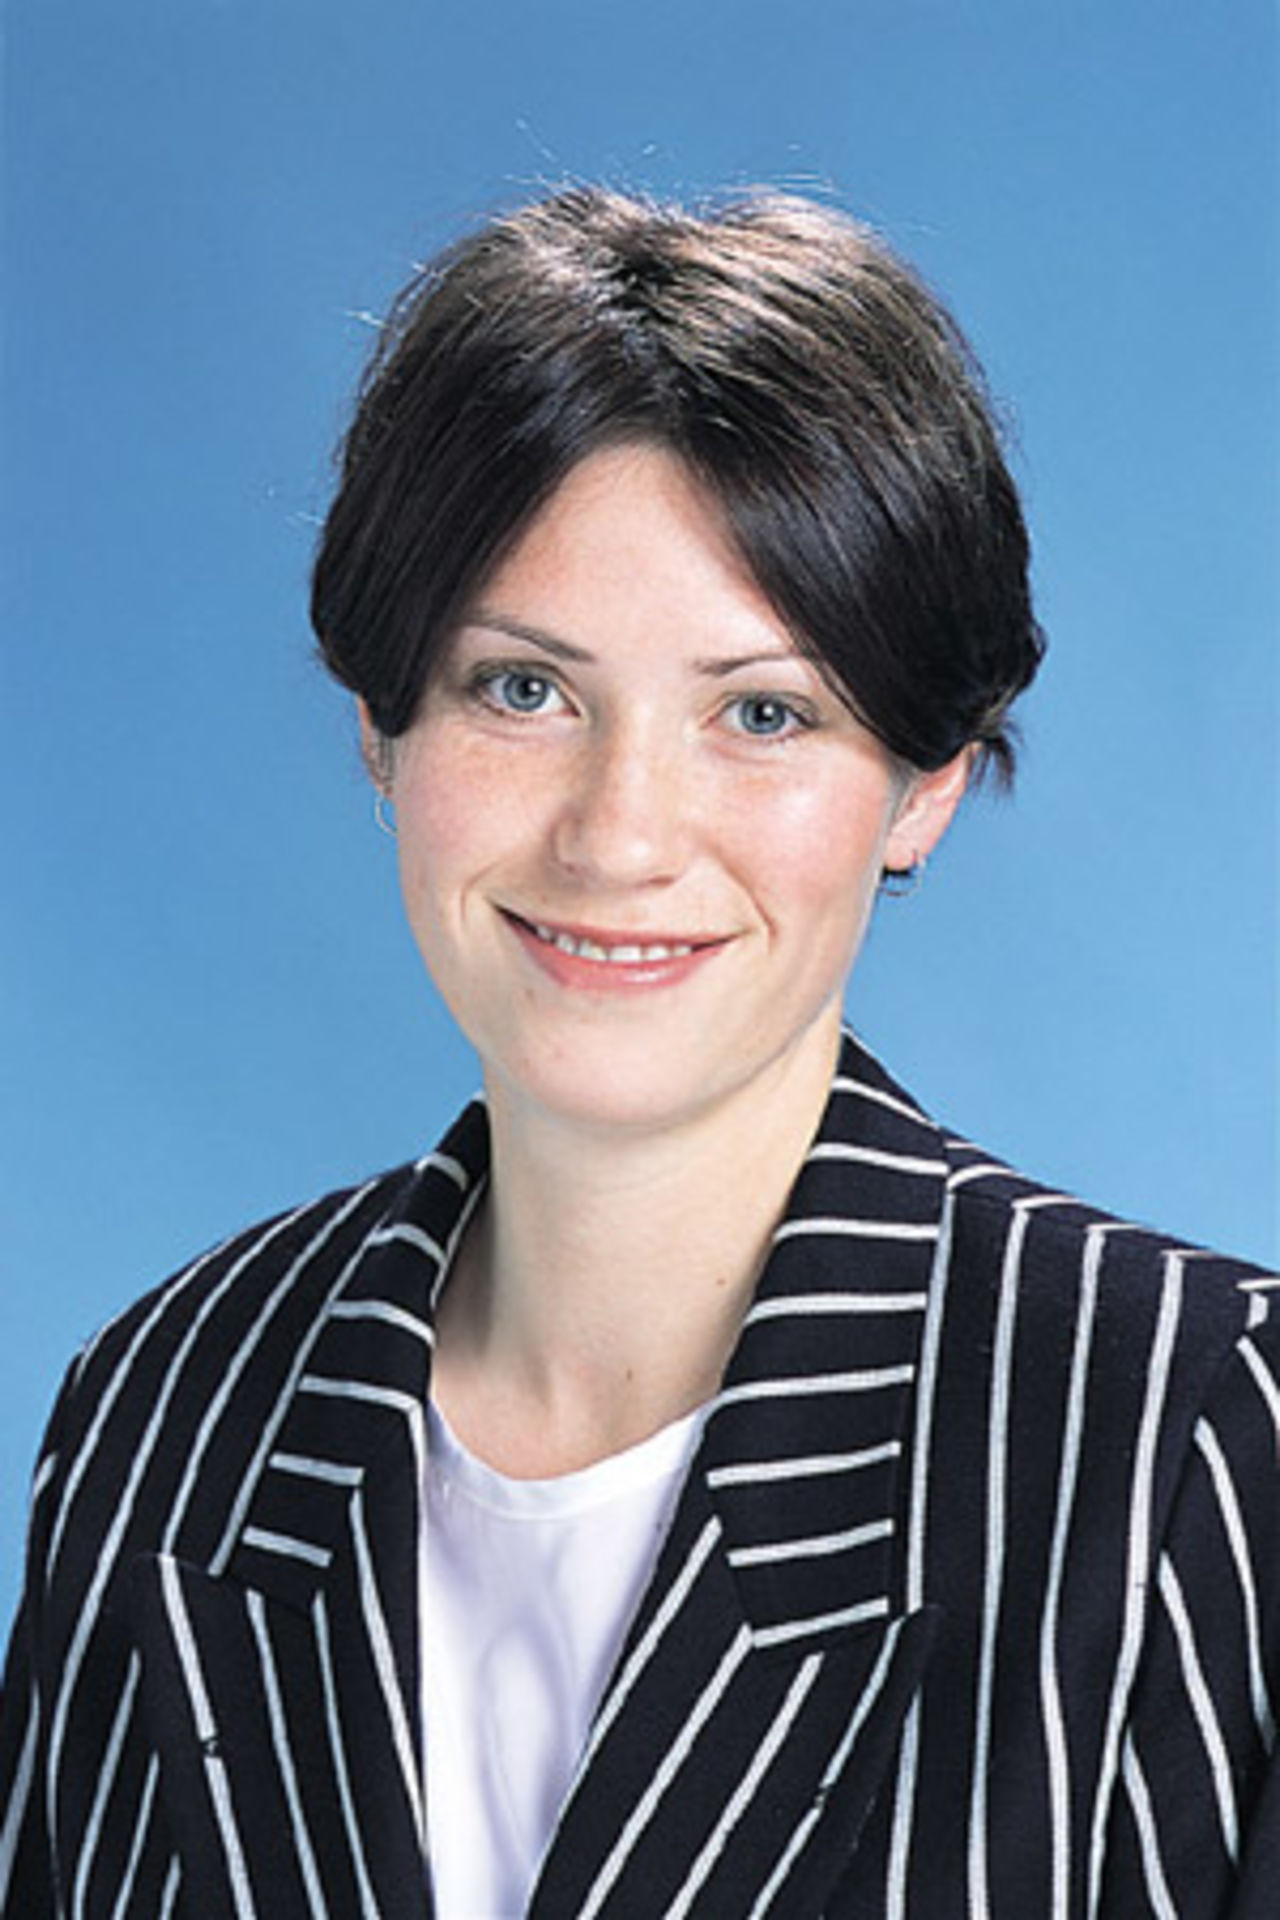 Portrait of Anna Corbin - New Zealand women's player in the 2001/02 season.